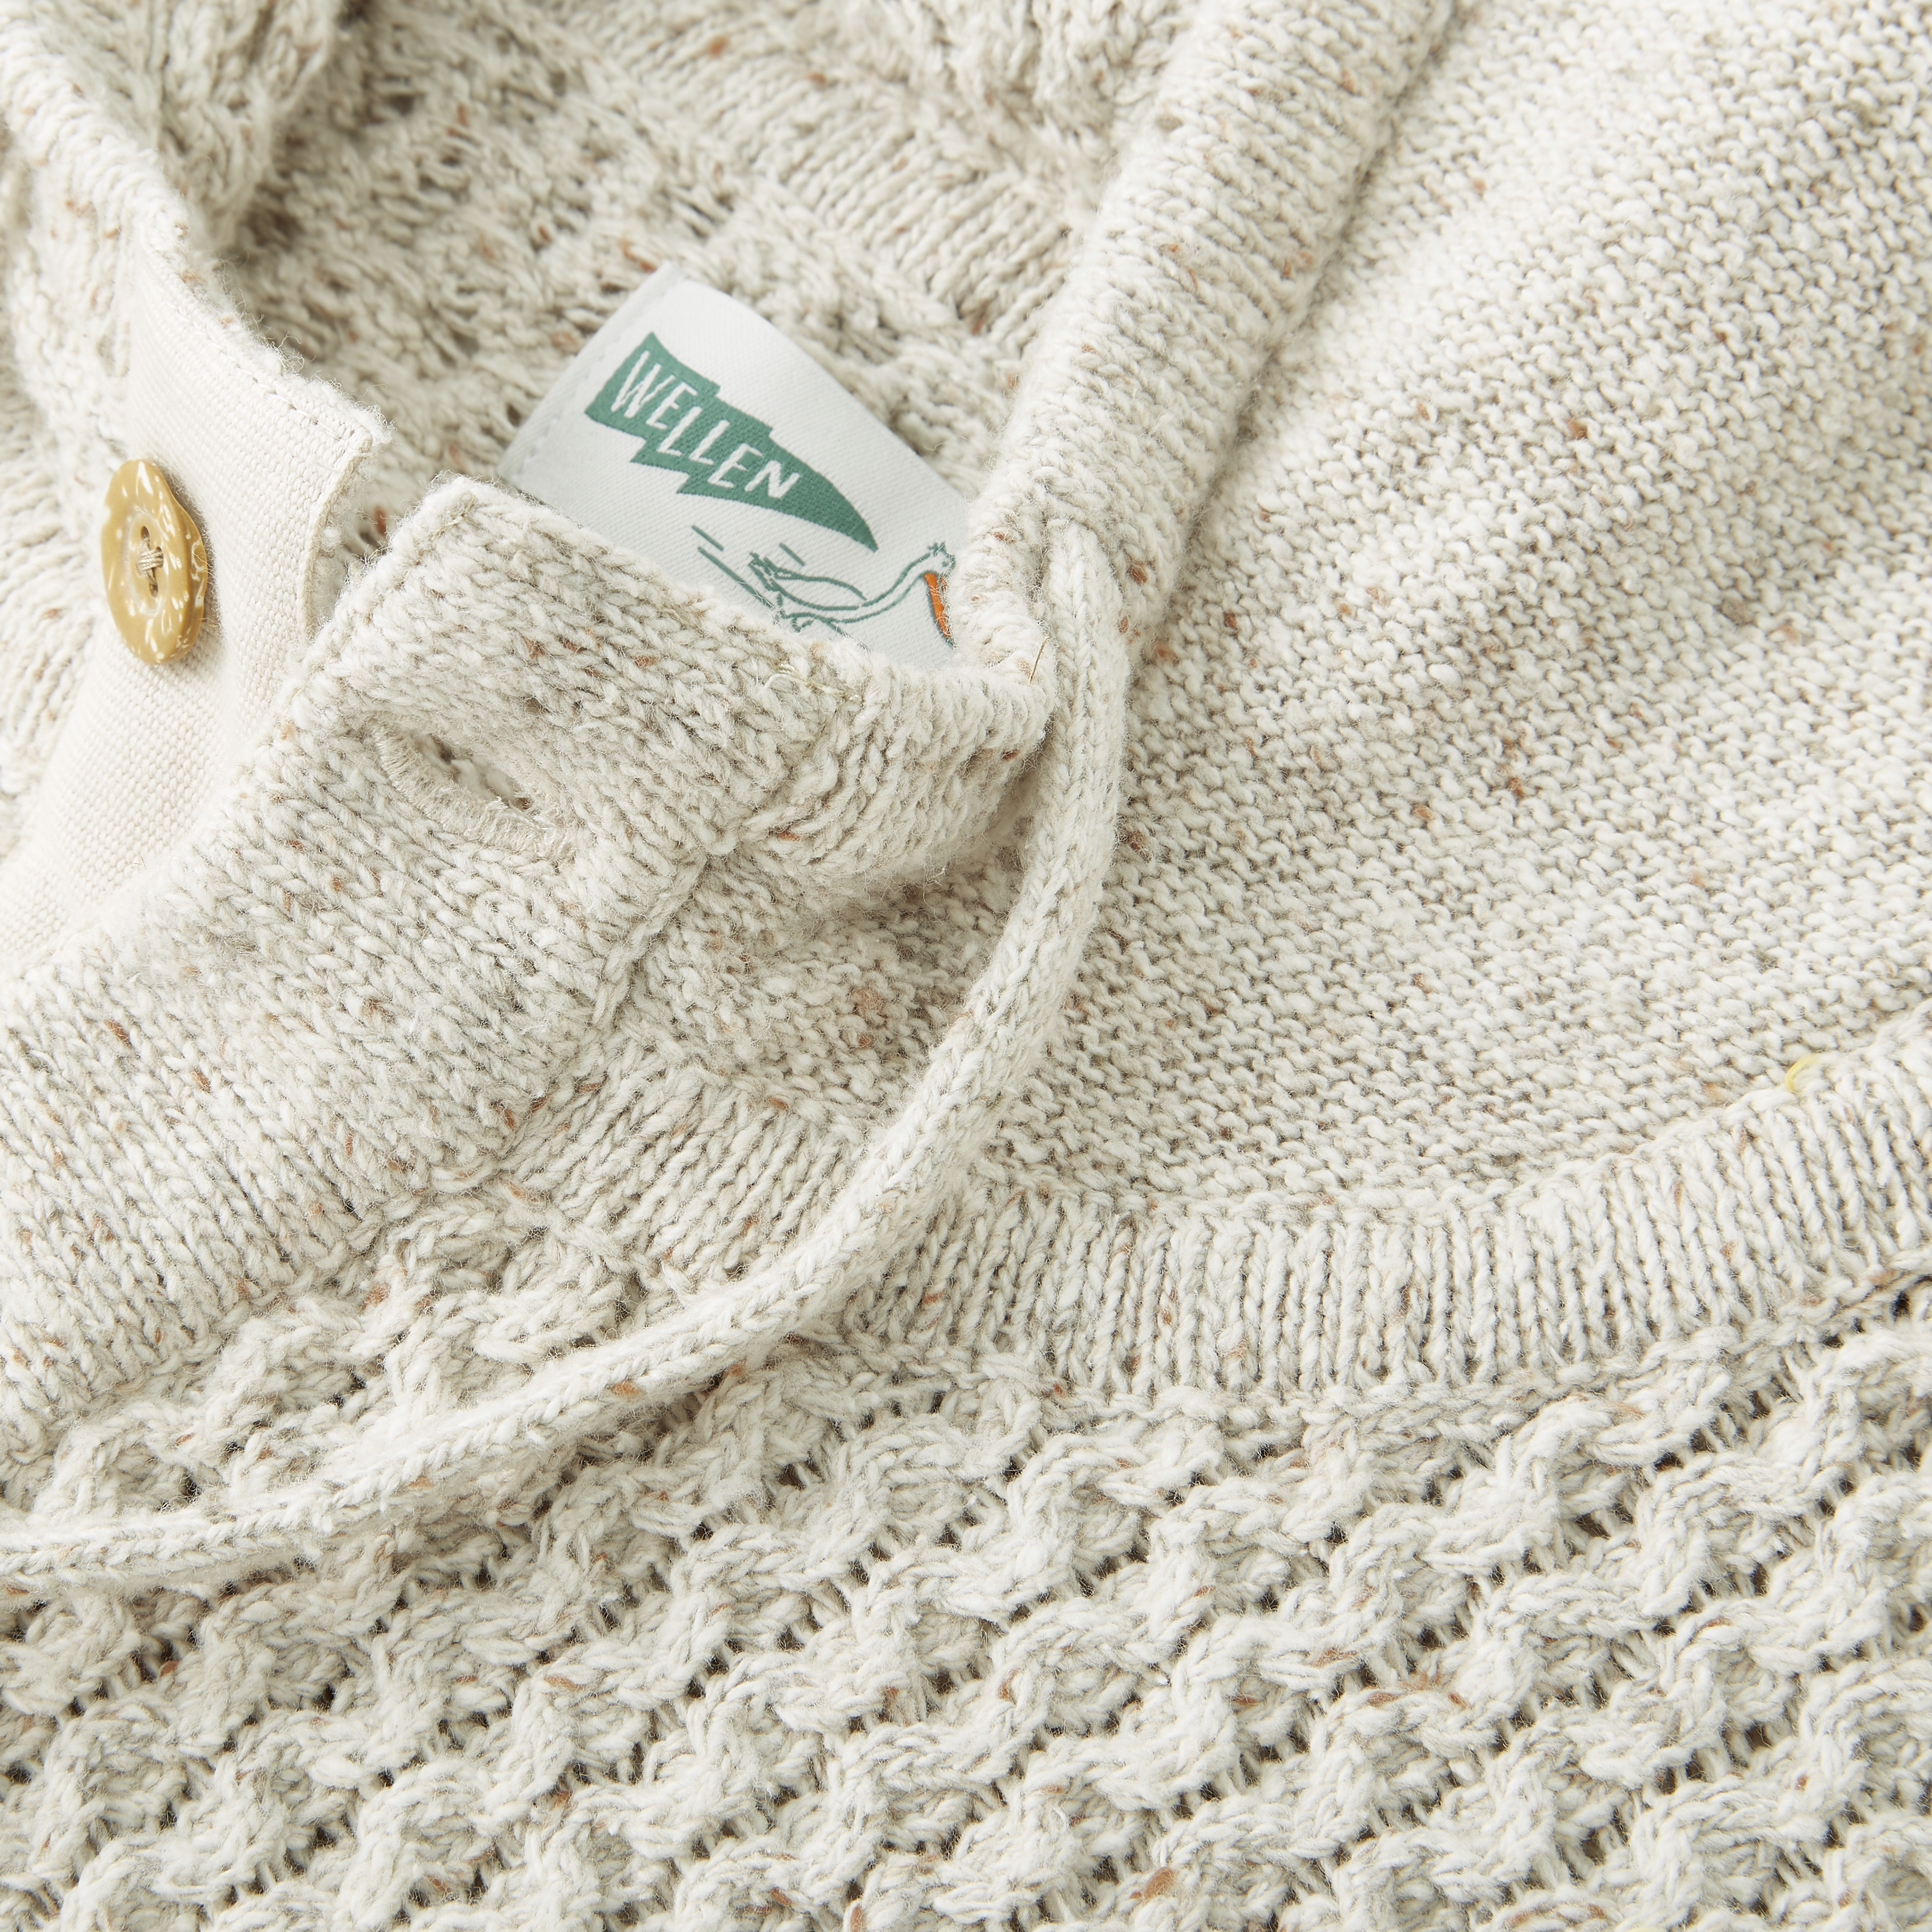 Wellen Recycled Cotton Headlands Poncho Sweater - Heather Bone